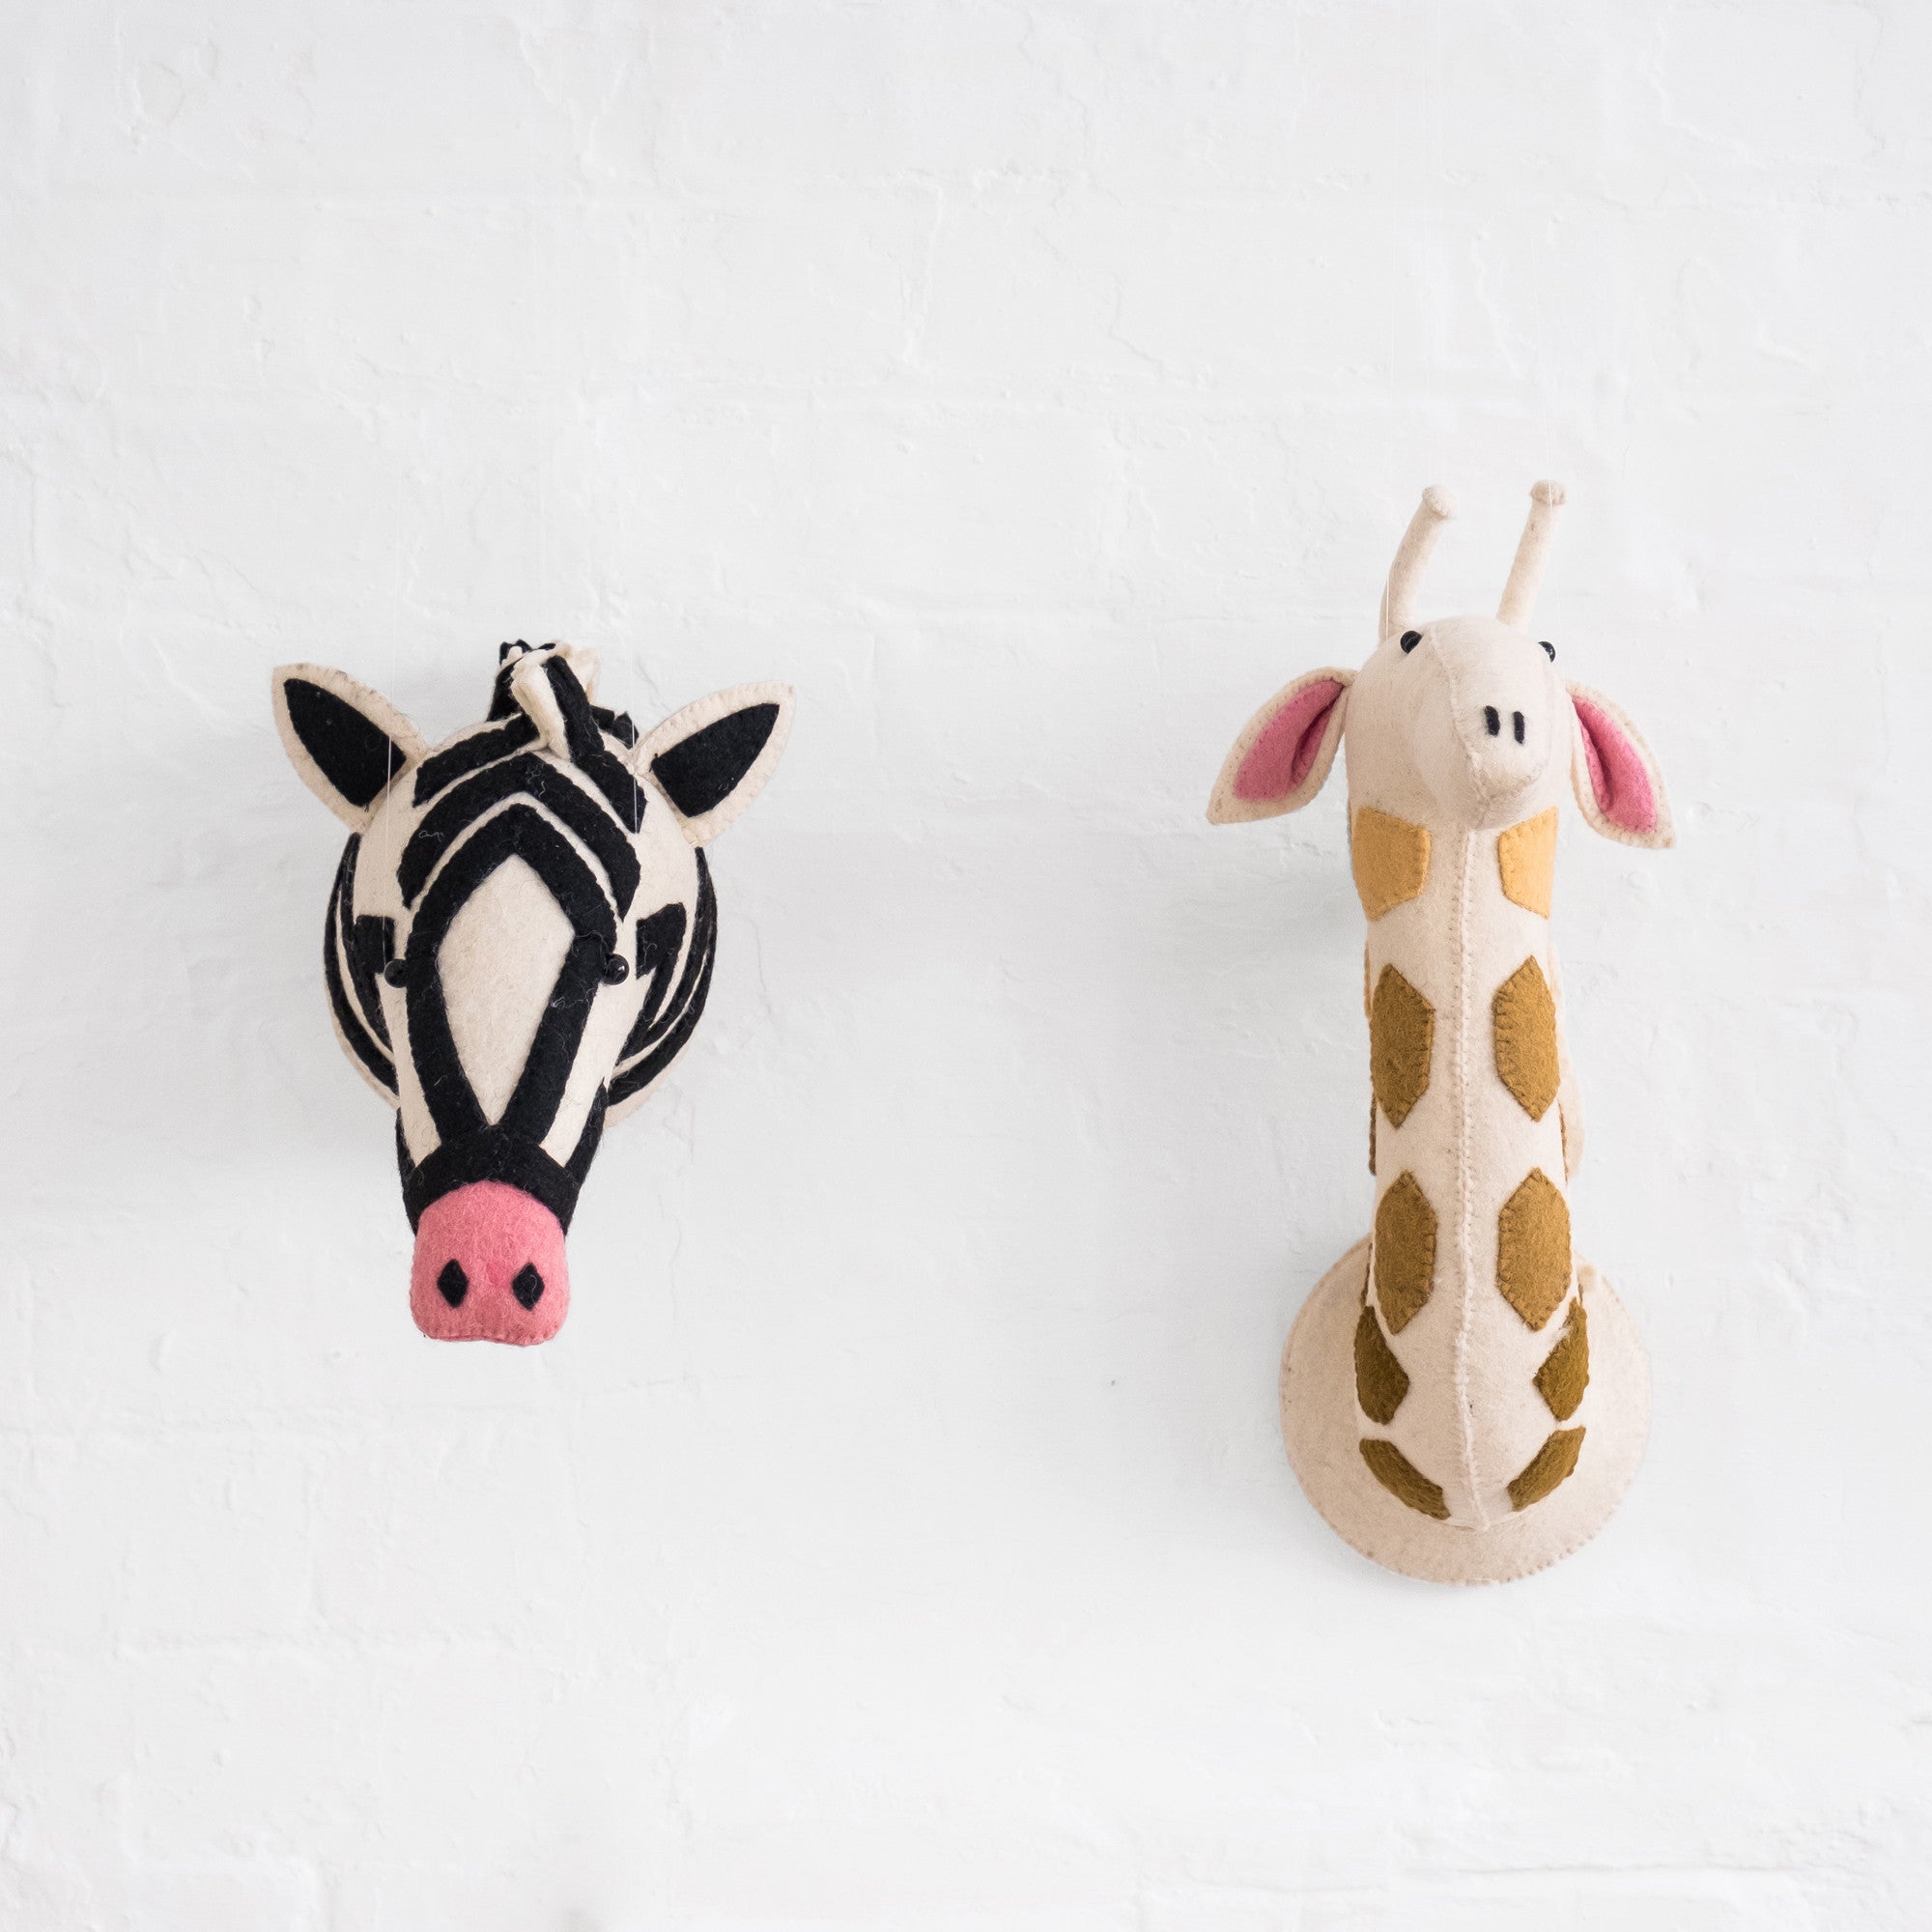 Felt Zebra Head and Felt Giraffe Head by Fiona Walker England, available at Bobby Rabbit.